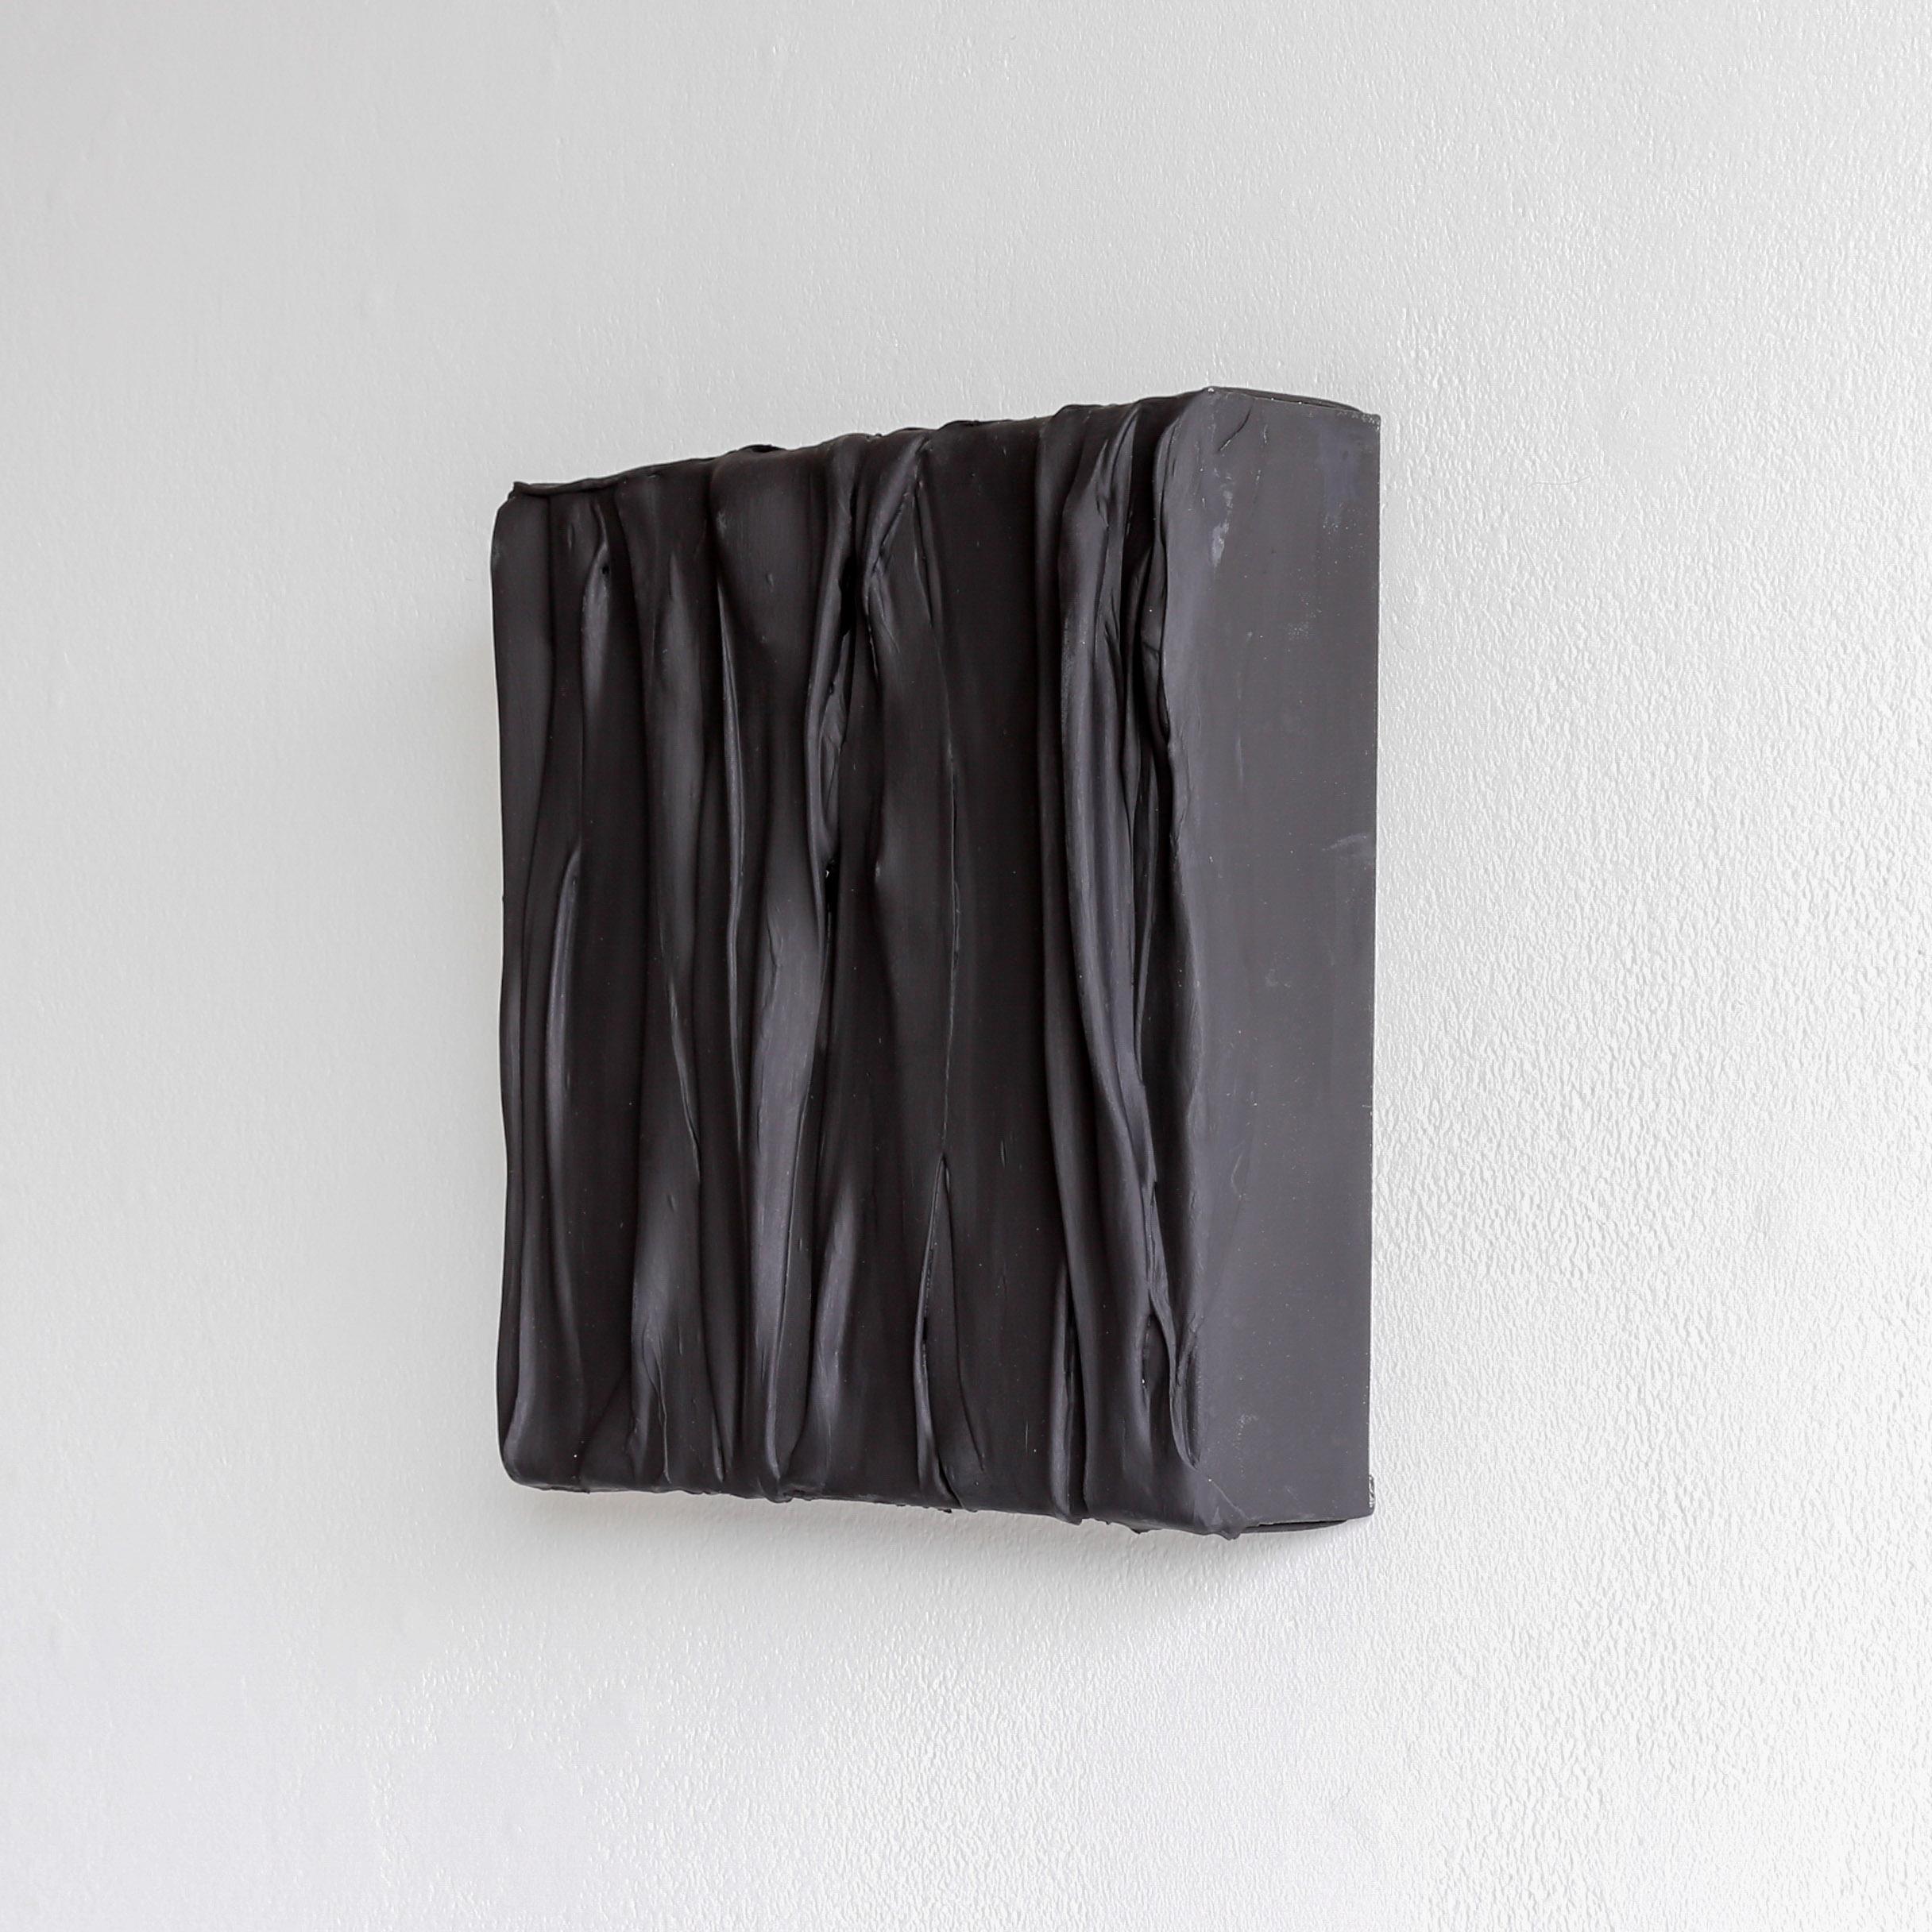 AMEE CALLOWAY
Avant Garde Series Noir Small

• Sculptured Texture On Birch Board
12.00w x 12.00h x 2.00d in
$450.00